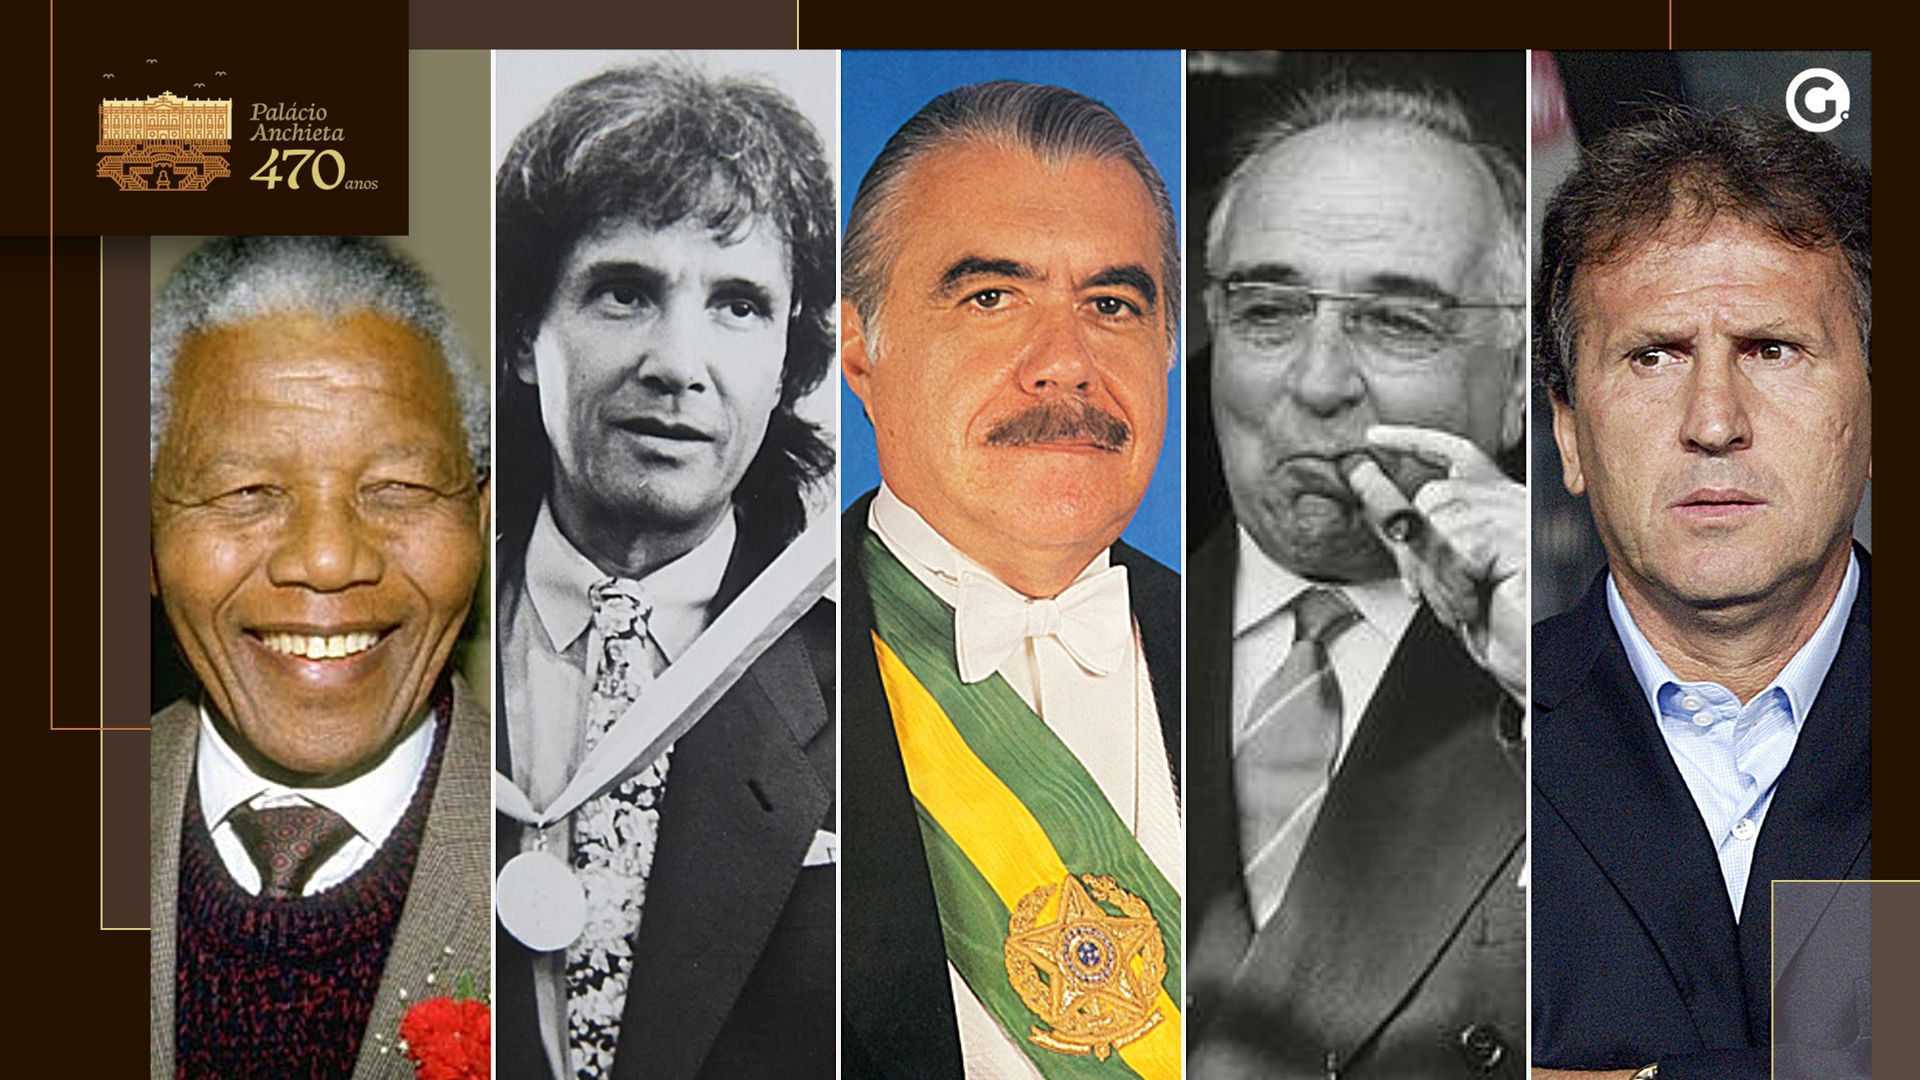 Nelson Mandela, Roberto Carlos, José Sarney, Getúlio Vargas e Zico: conheça as histórias dessas visitas ilustres